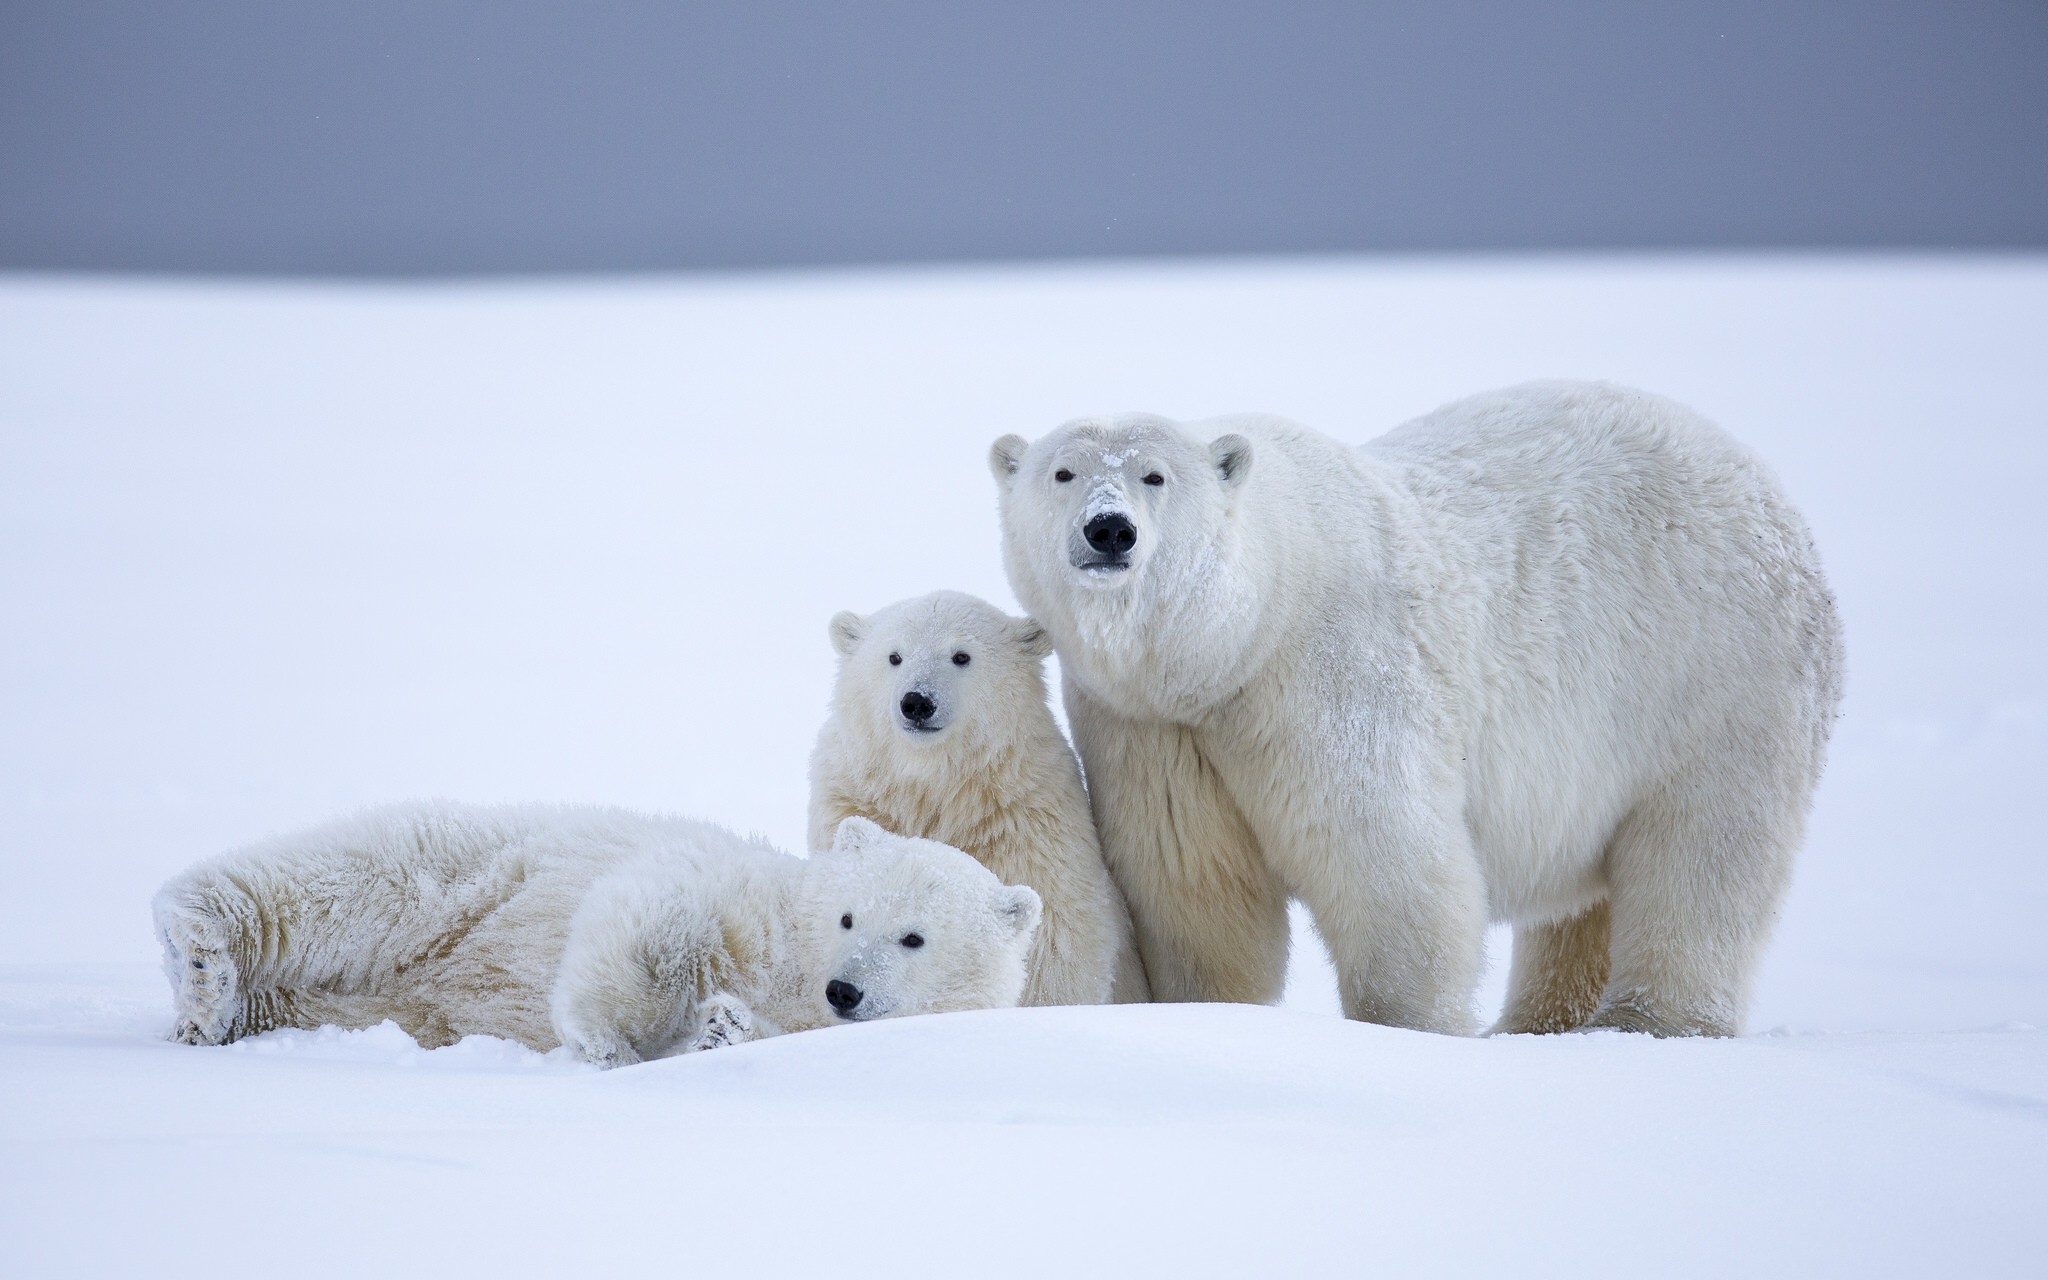 General 2048x1280 animals polar bears snow baby animals white wildlife bears mammals